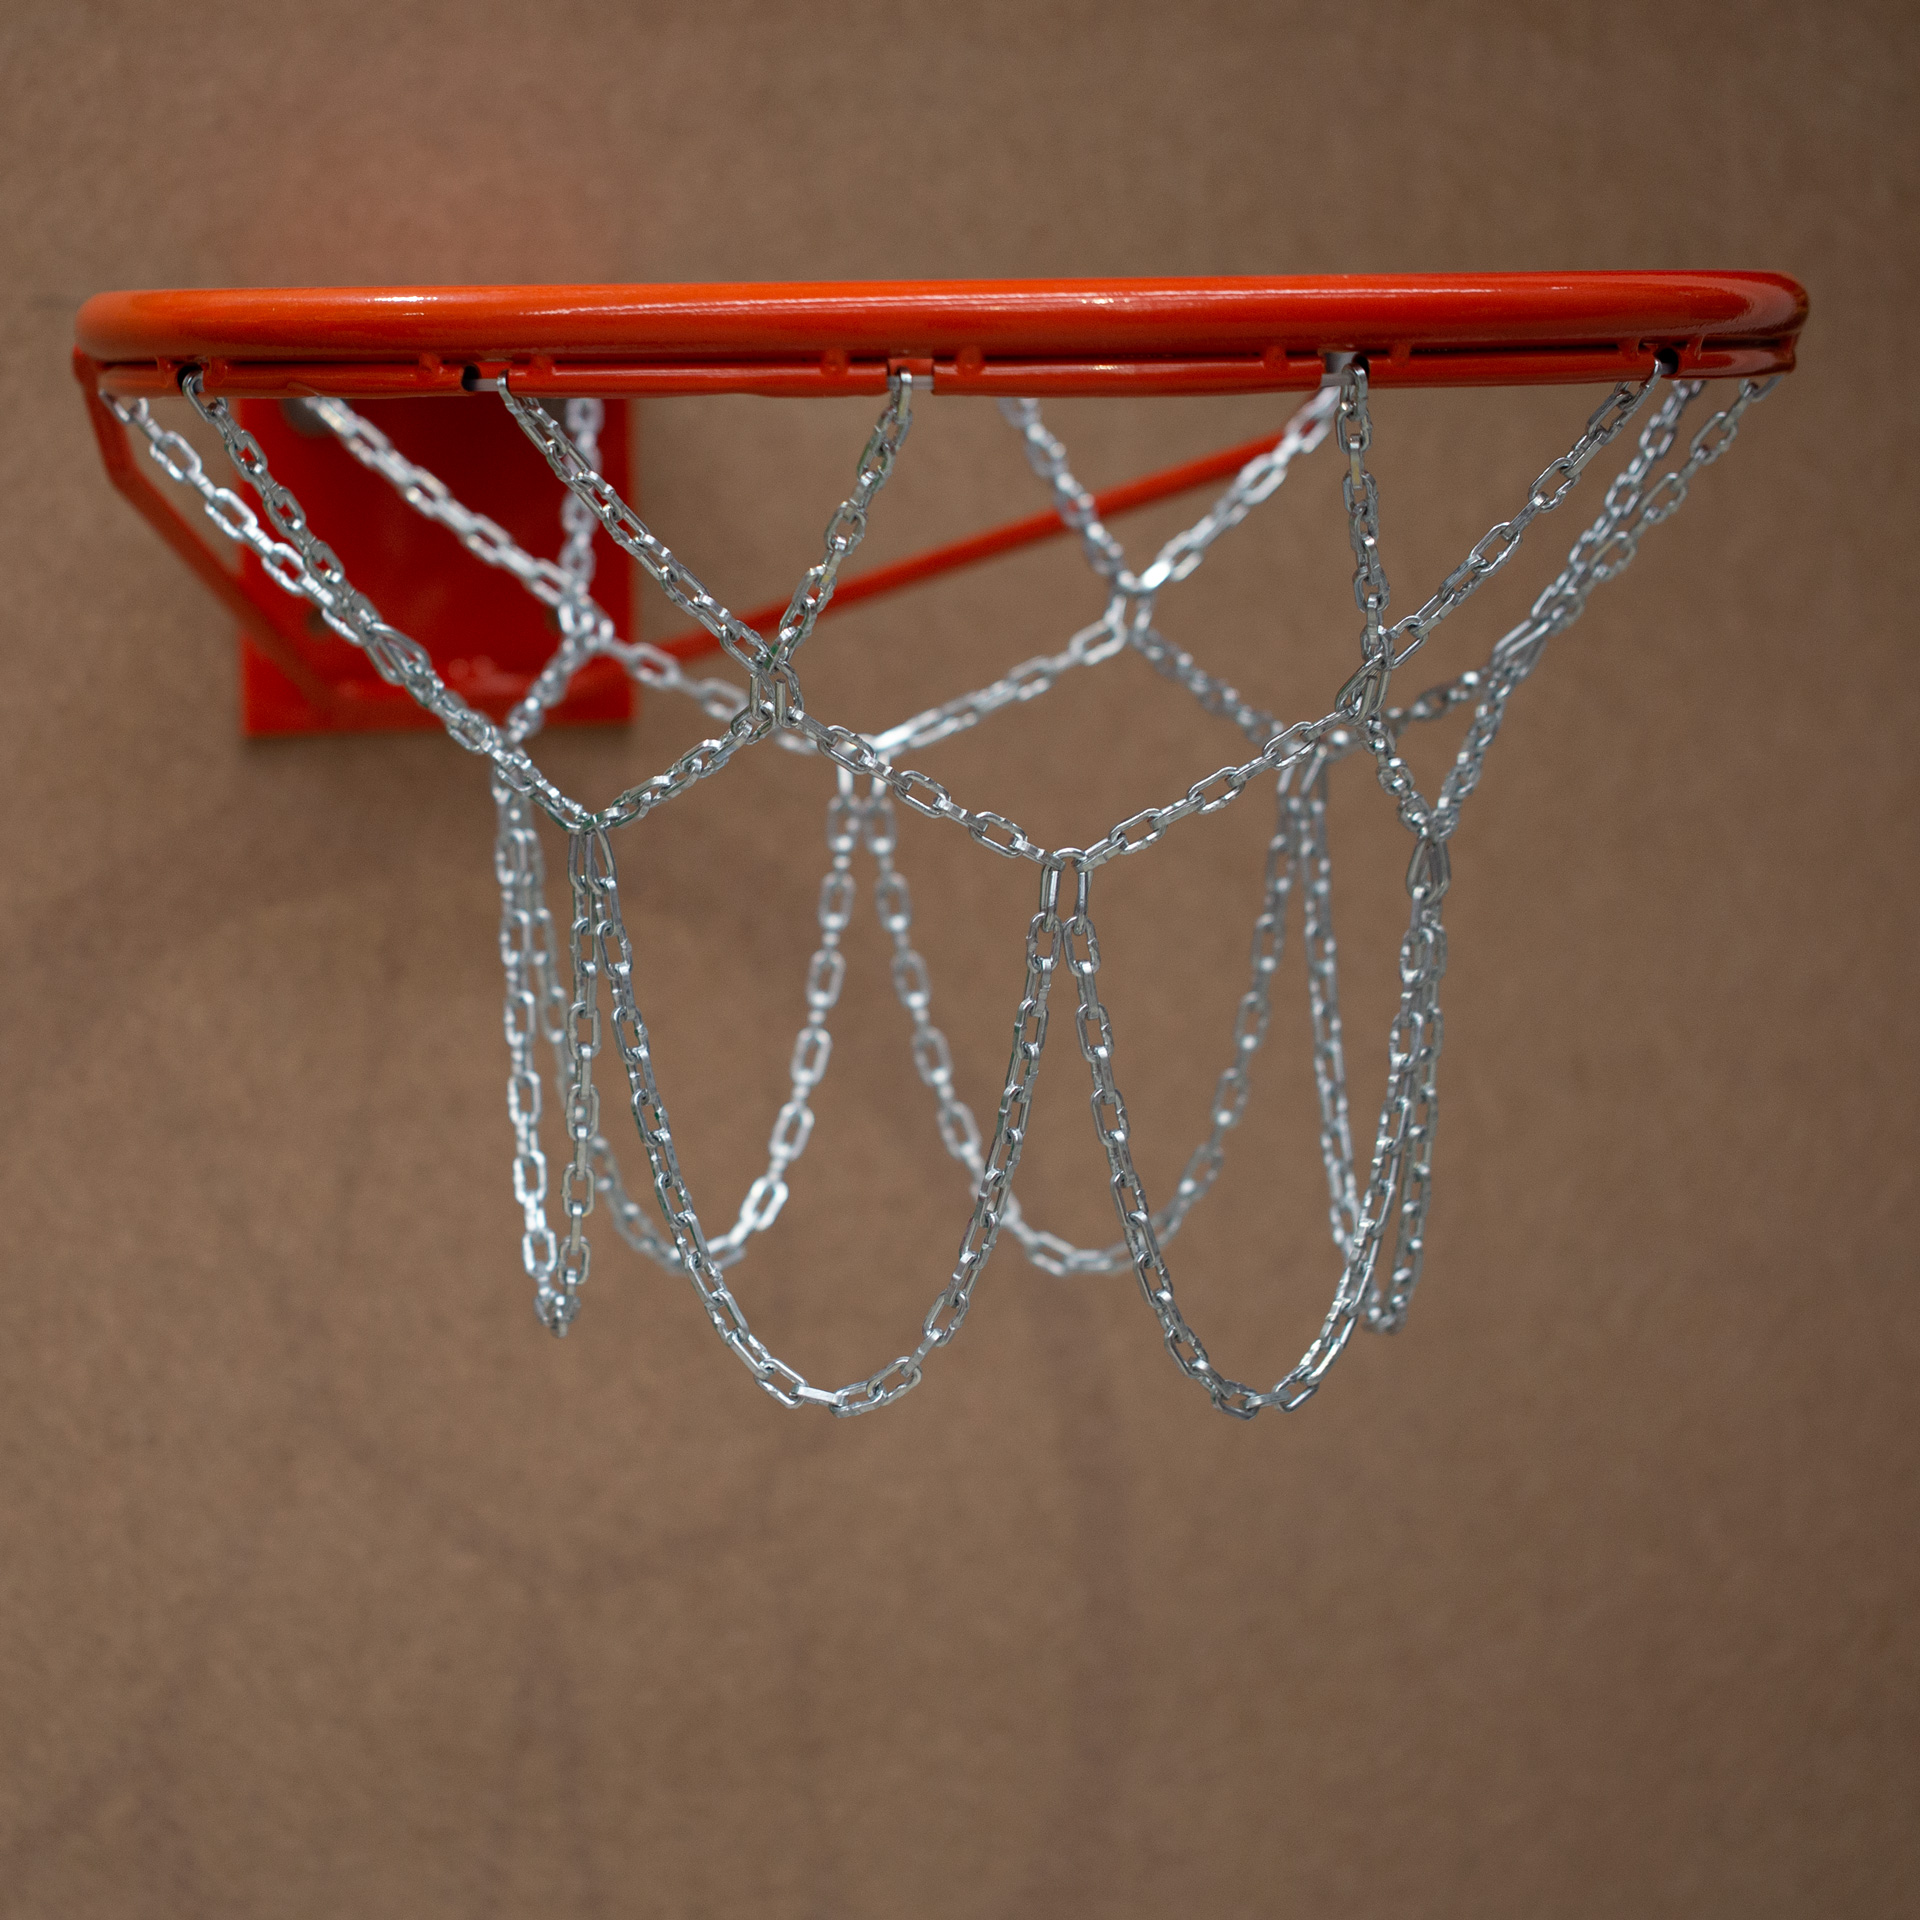 juego redes de baloncesto antivandalicas 1